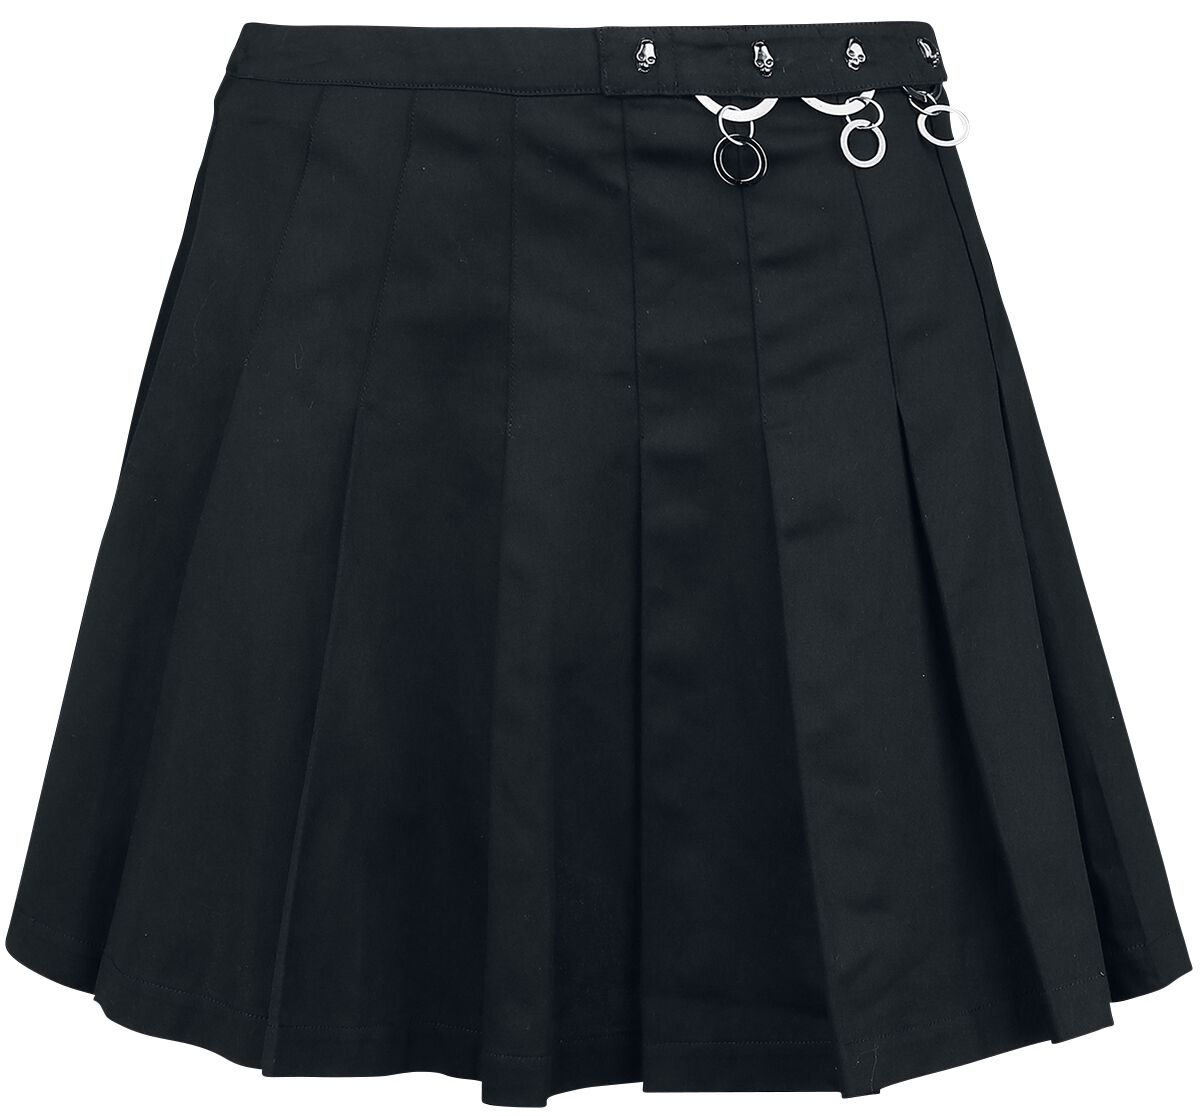 Banned Alternative Pleated Ring Skirt Kurzer Rock schwarz in XS